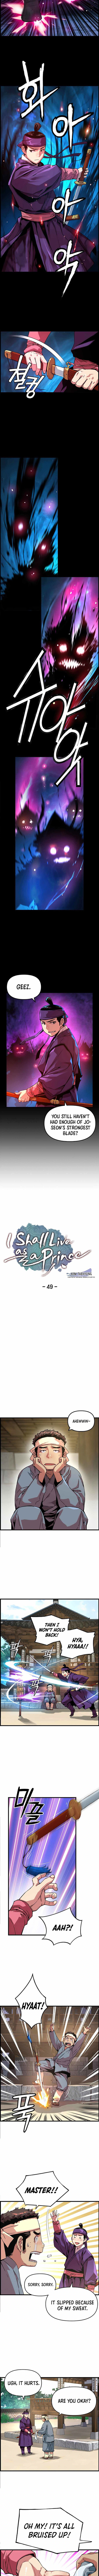 I Shall Live As a Prince Chapter 49 page 3